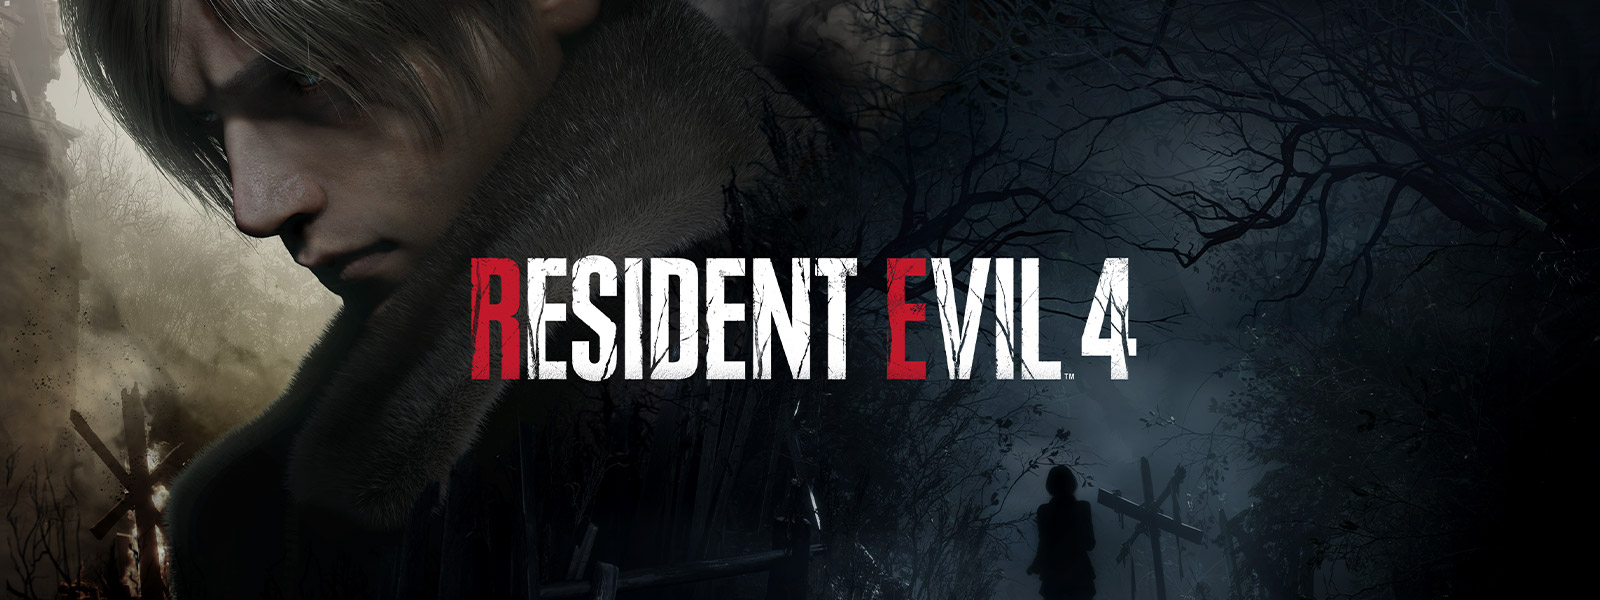 Resident Evil 4, 백발의 남성이 어두컴컴한 숲길을 걸어 내려가는 여성을 애써 외면합니다.